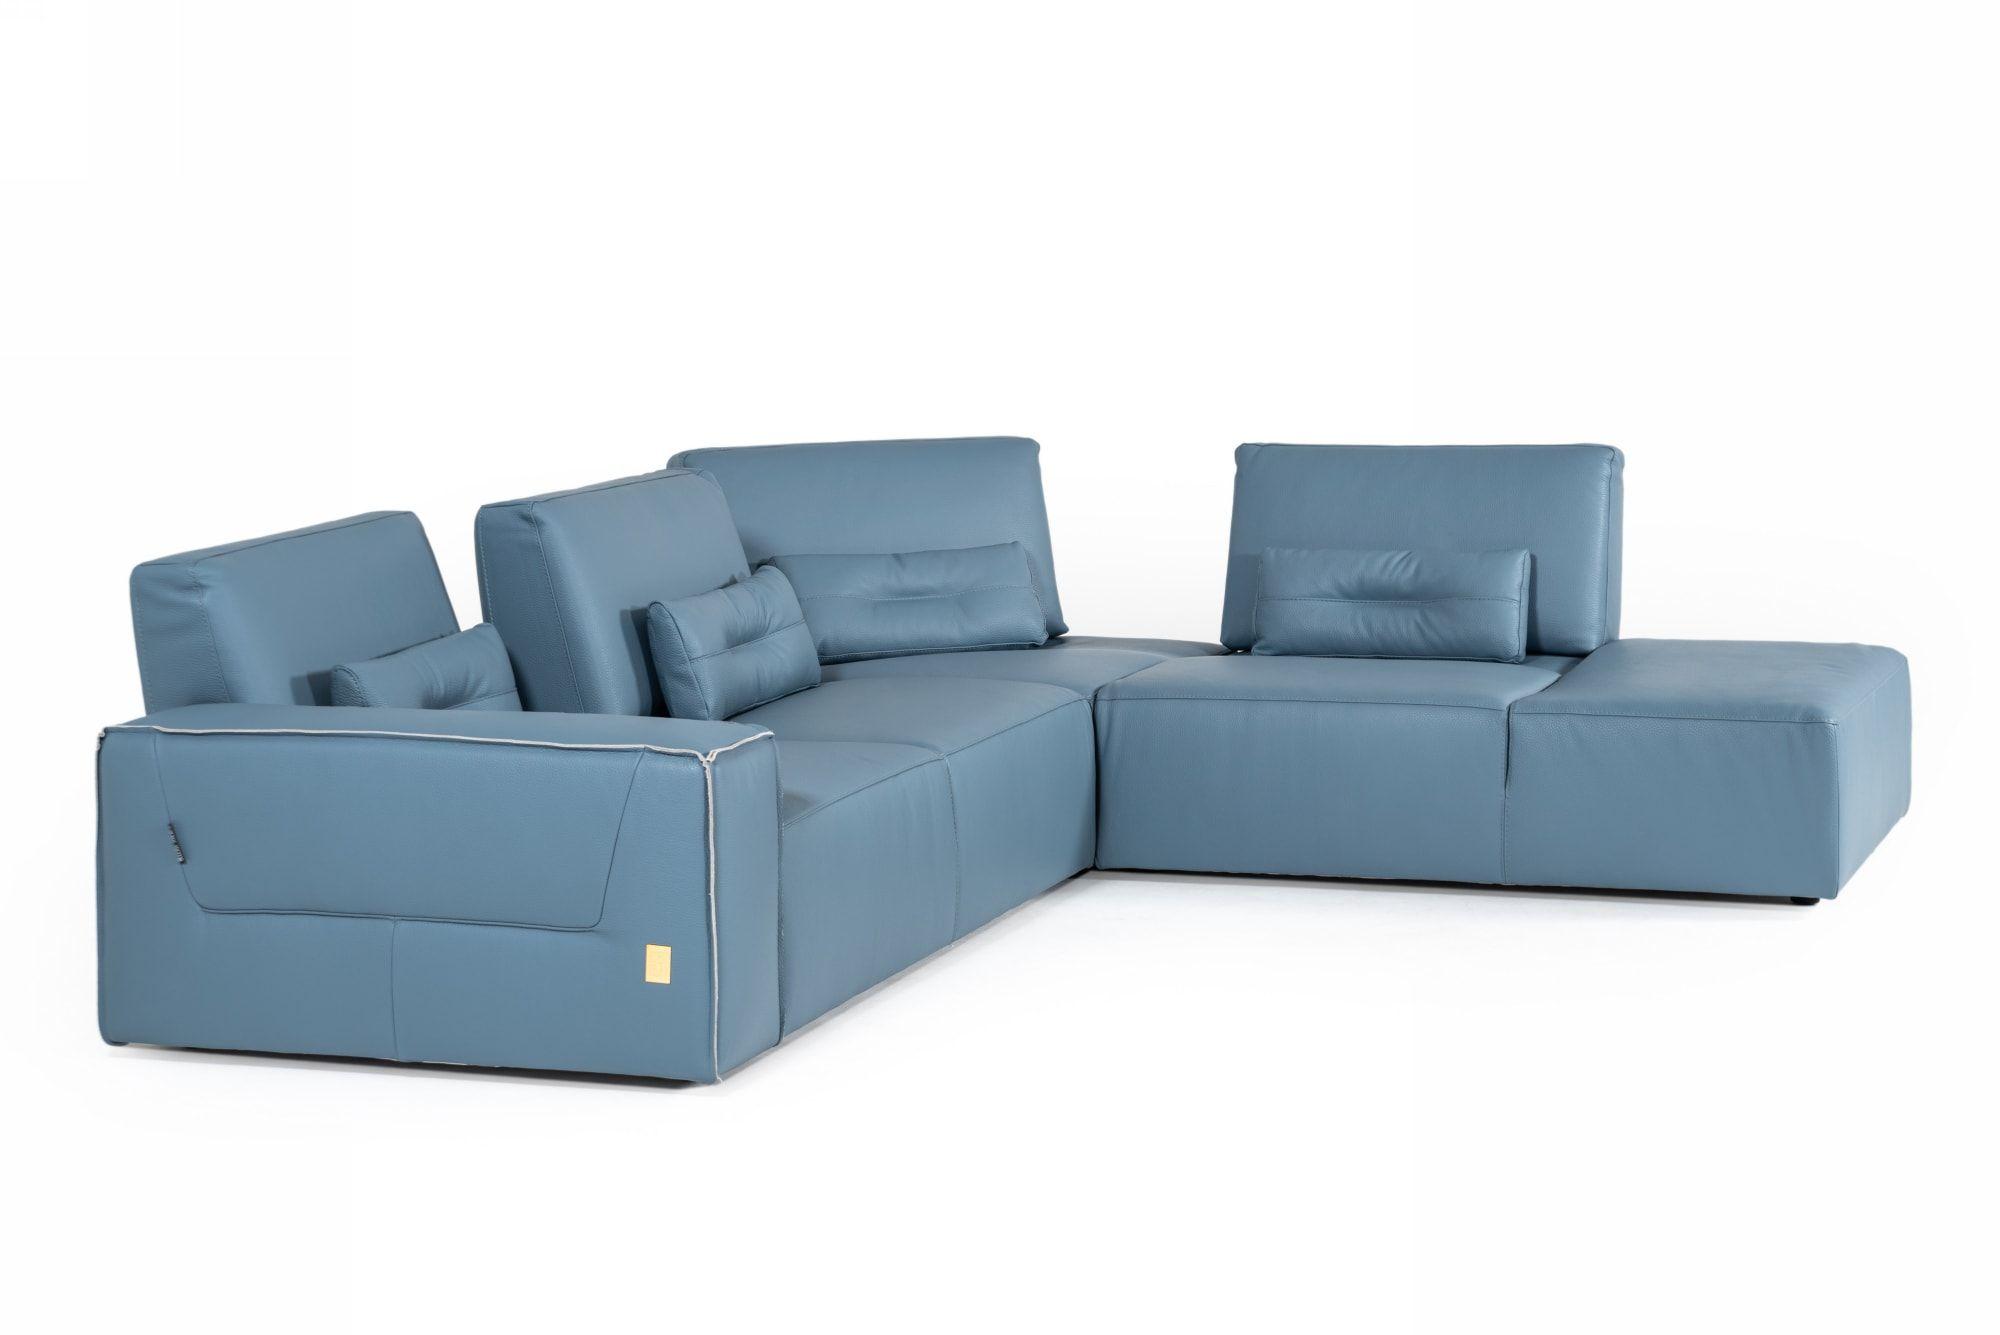 Contemporary, Modern Sectional Sofa VGDDENJOY-BLUE VGDDENJOY-BLUE in Blue Genuine Leather